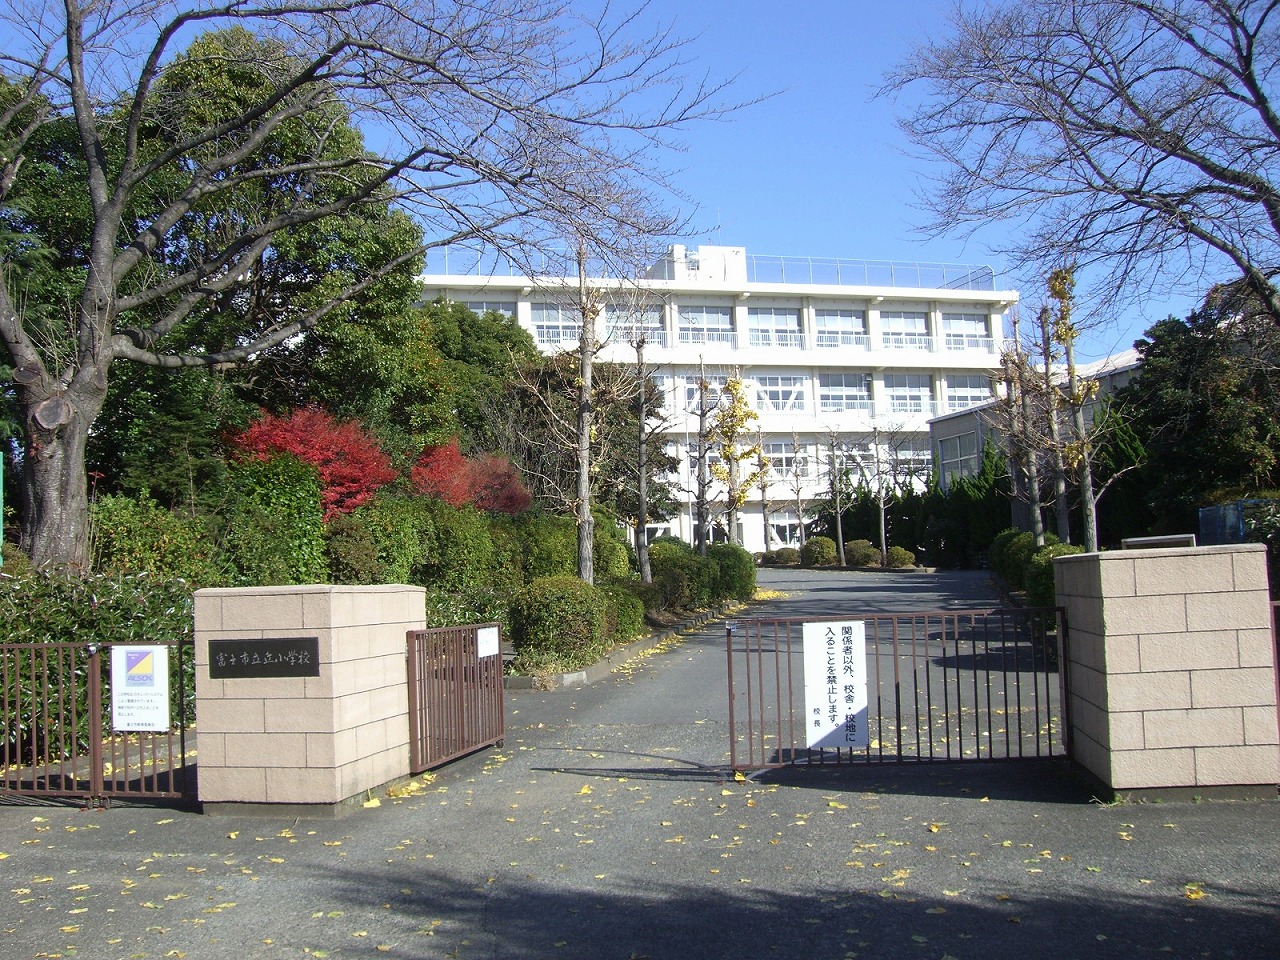 Primary school. 291m to Fuji City Tatsuoka elementary school (elementary school)